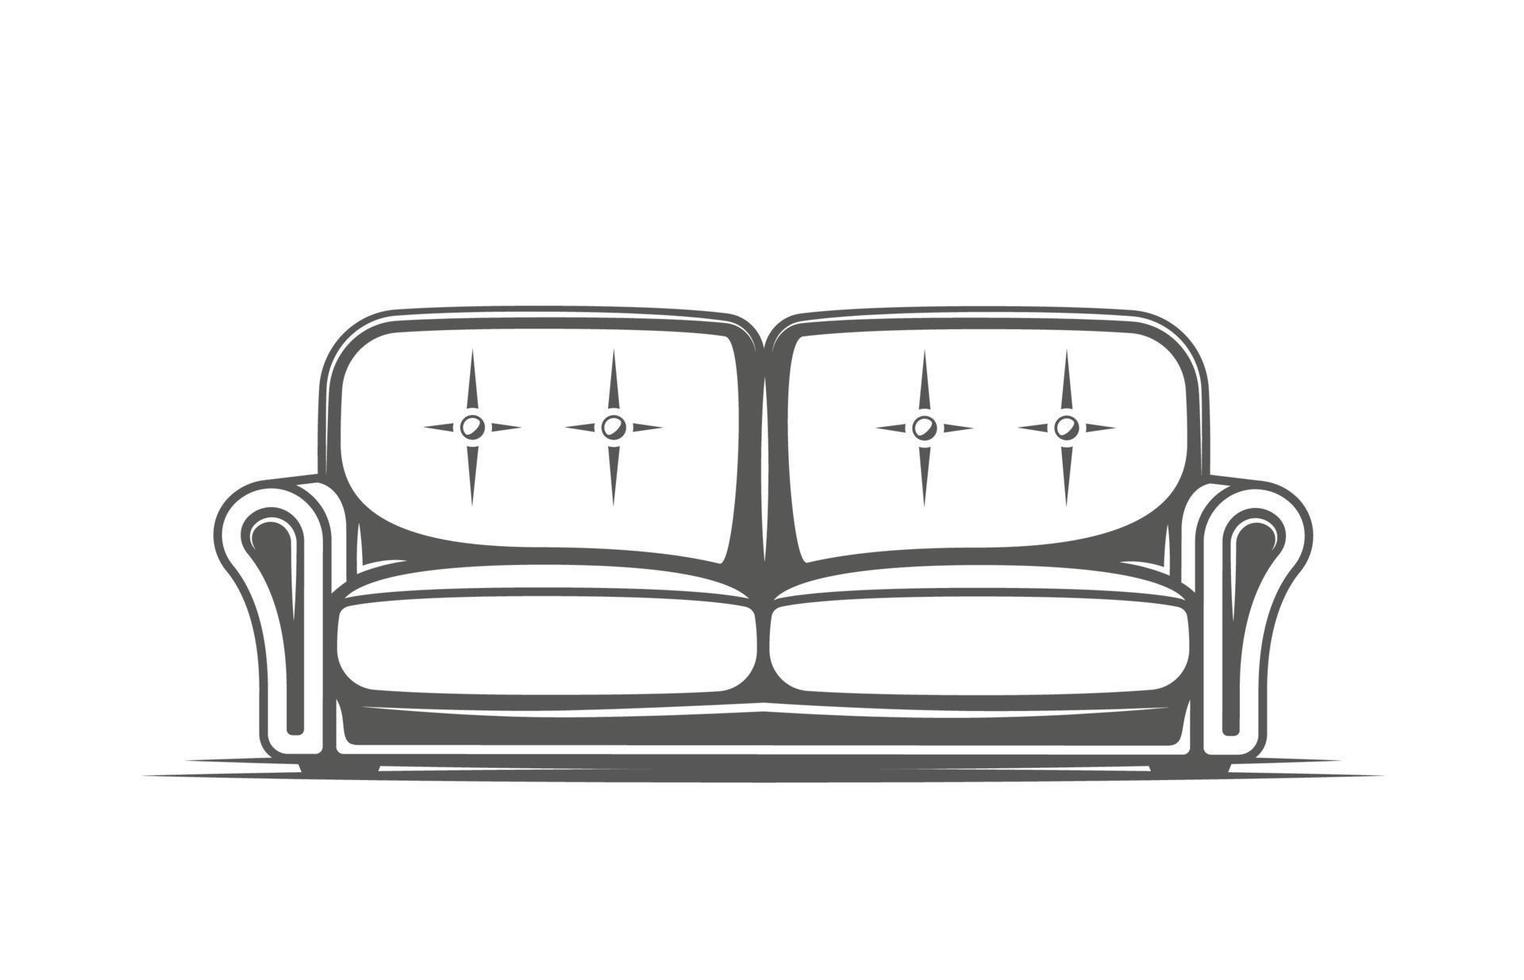 sofá isolado no fundo branco vetor